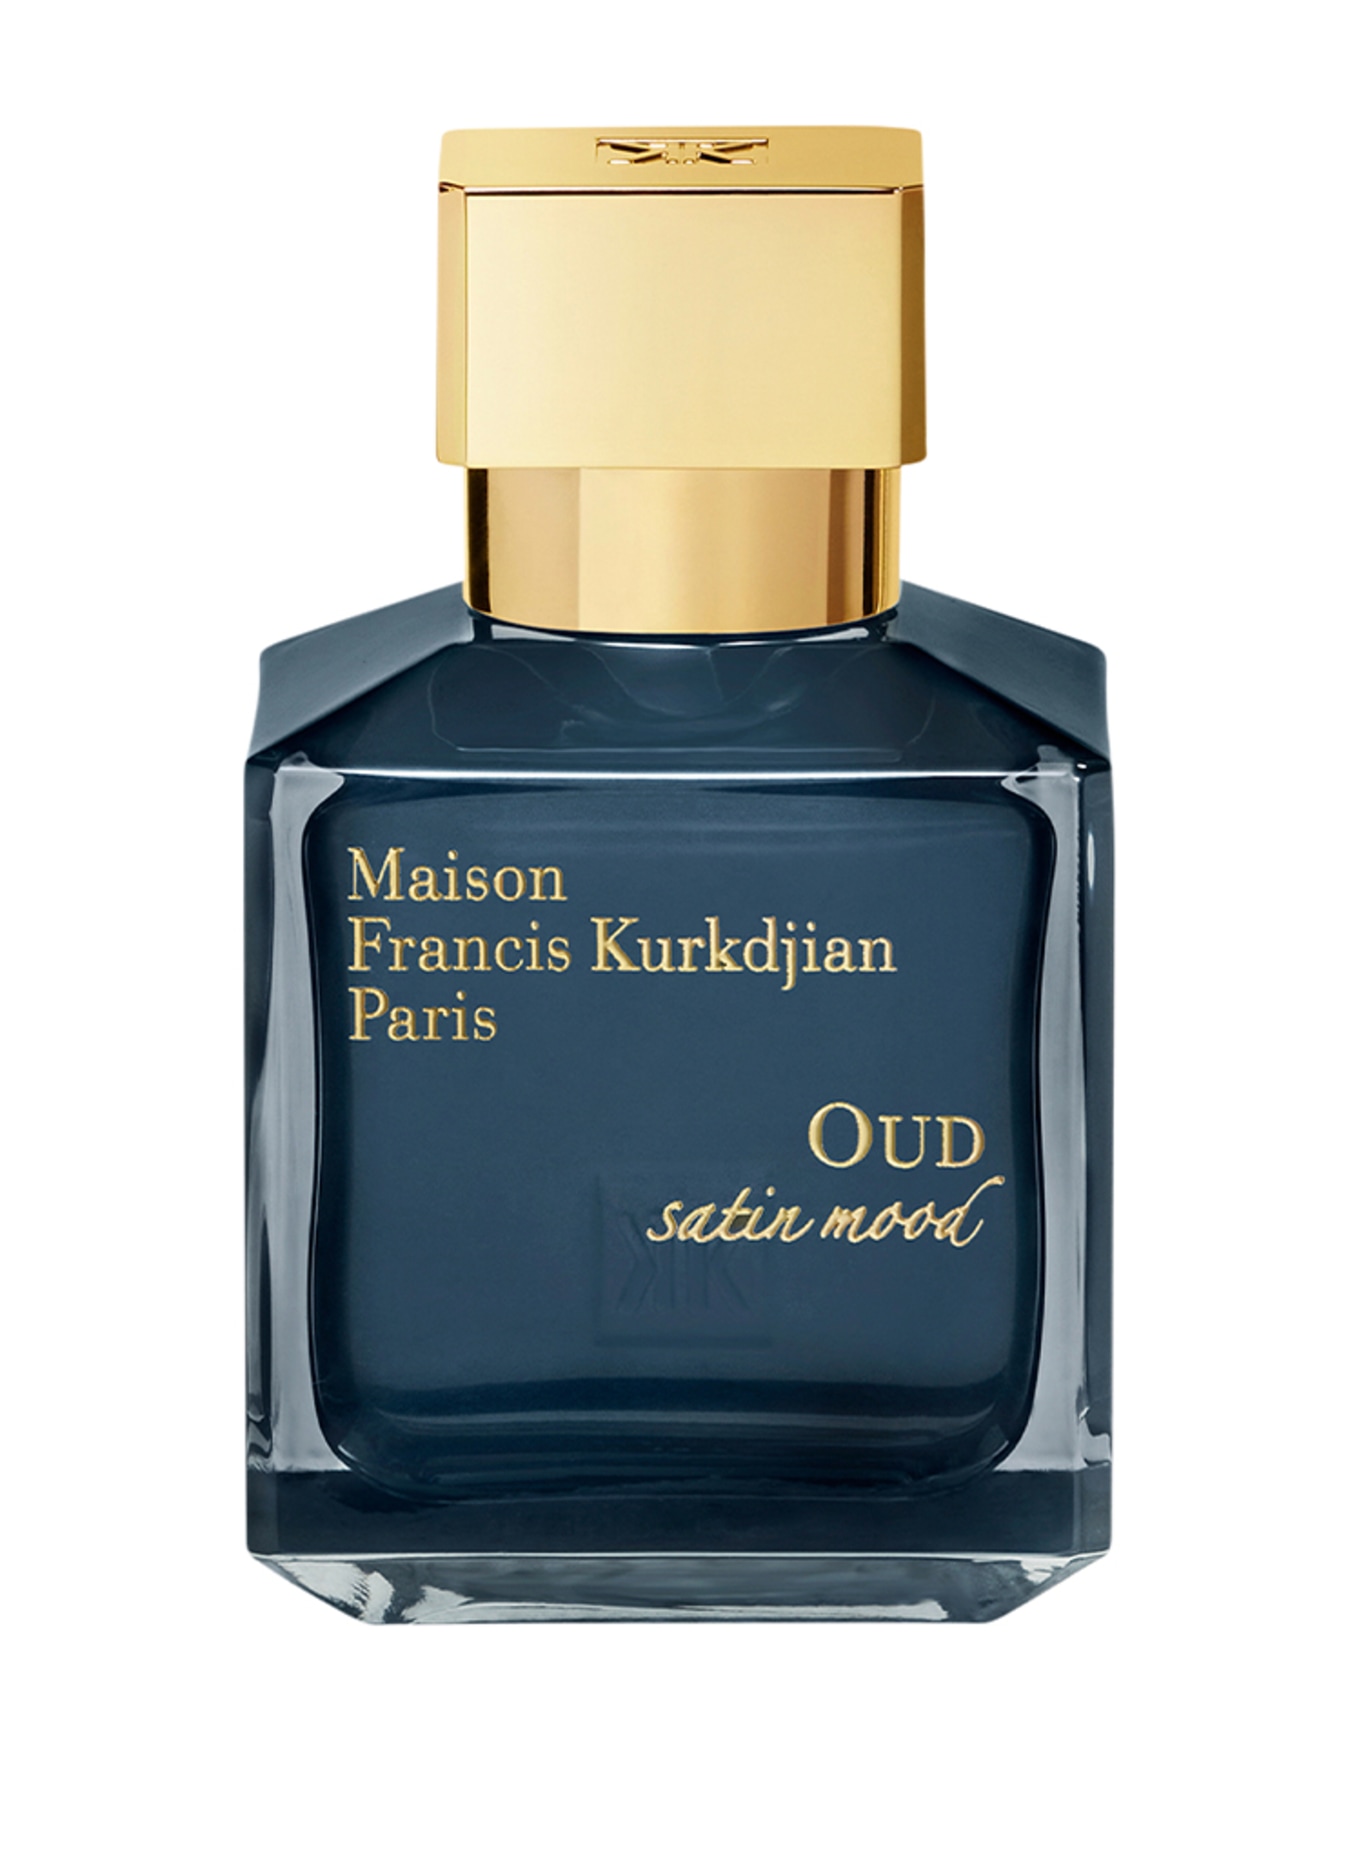 Maison Francis Kurkdjian Paris OUD SATIN MOOD (Bild 1)